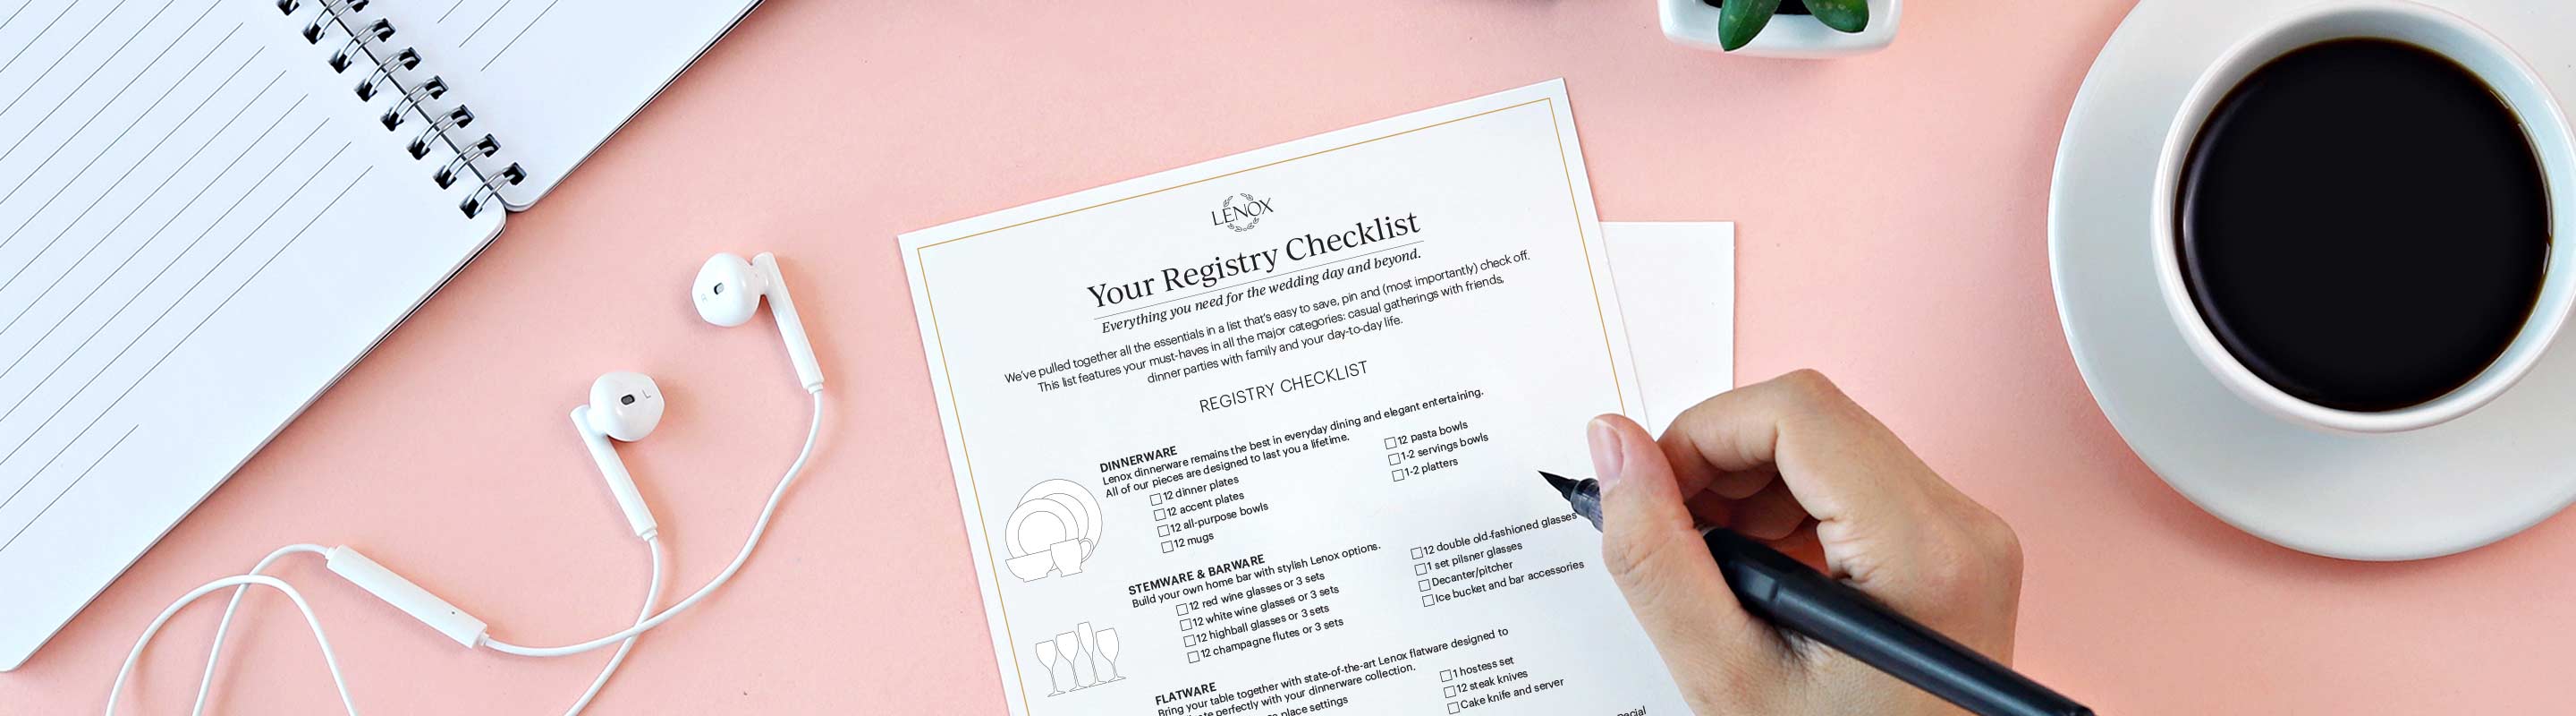 wedding registry checklist lenox www lenox com lenox corporation